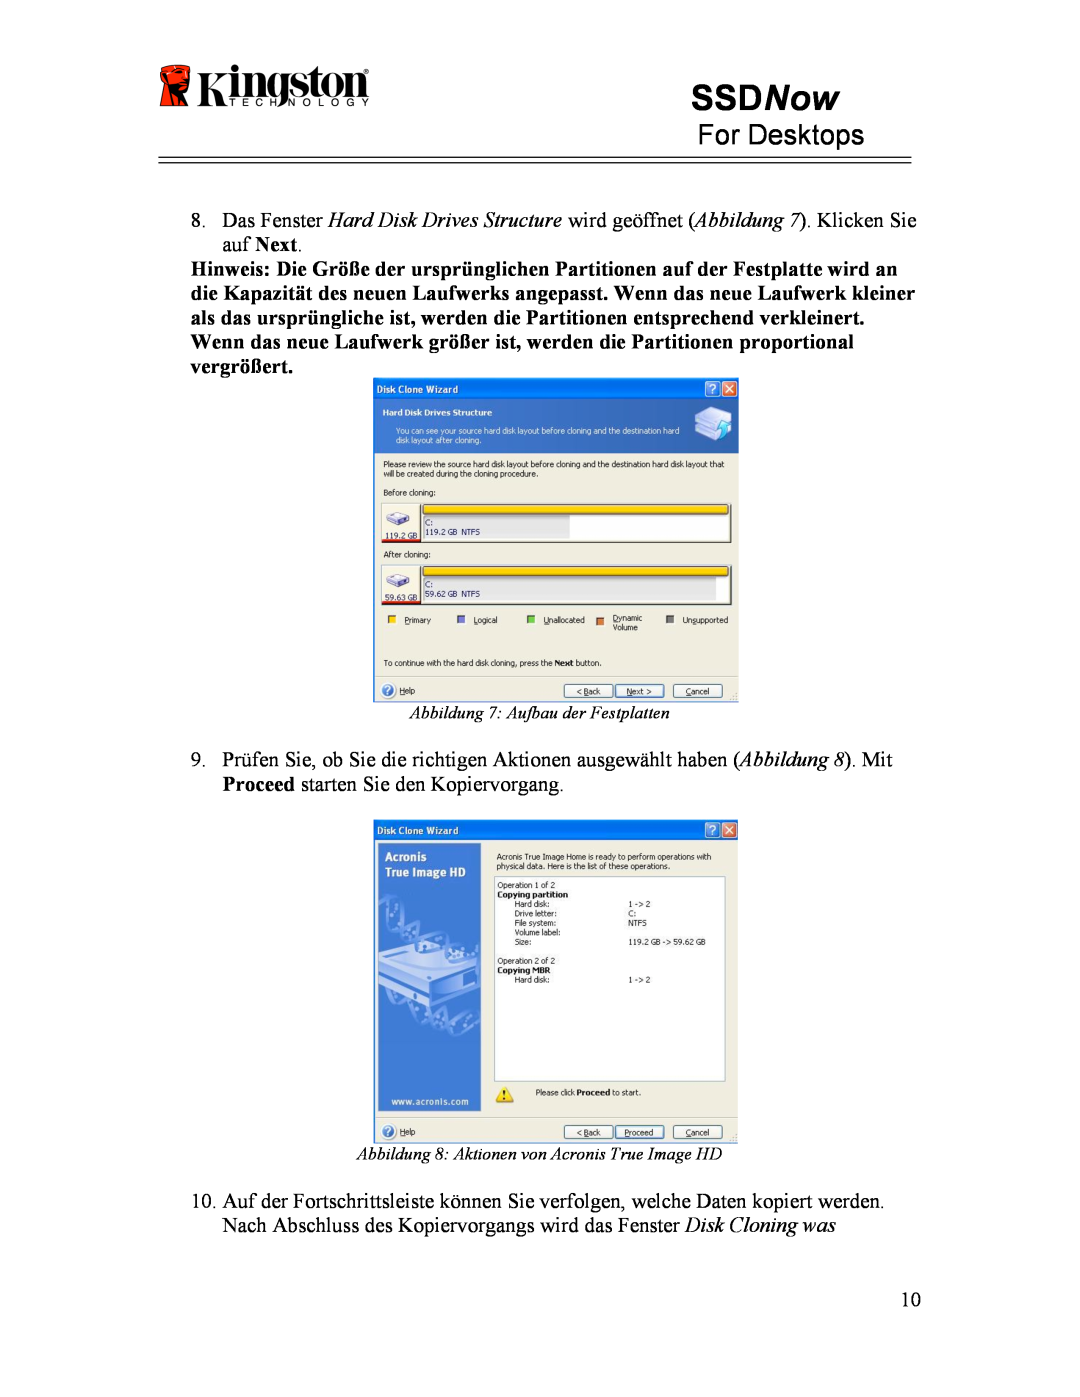 Kingston Technology 07-16-2009 manual SSDNow, For Desktops, Abbildung 7 Aufbau der Festplatten 